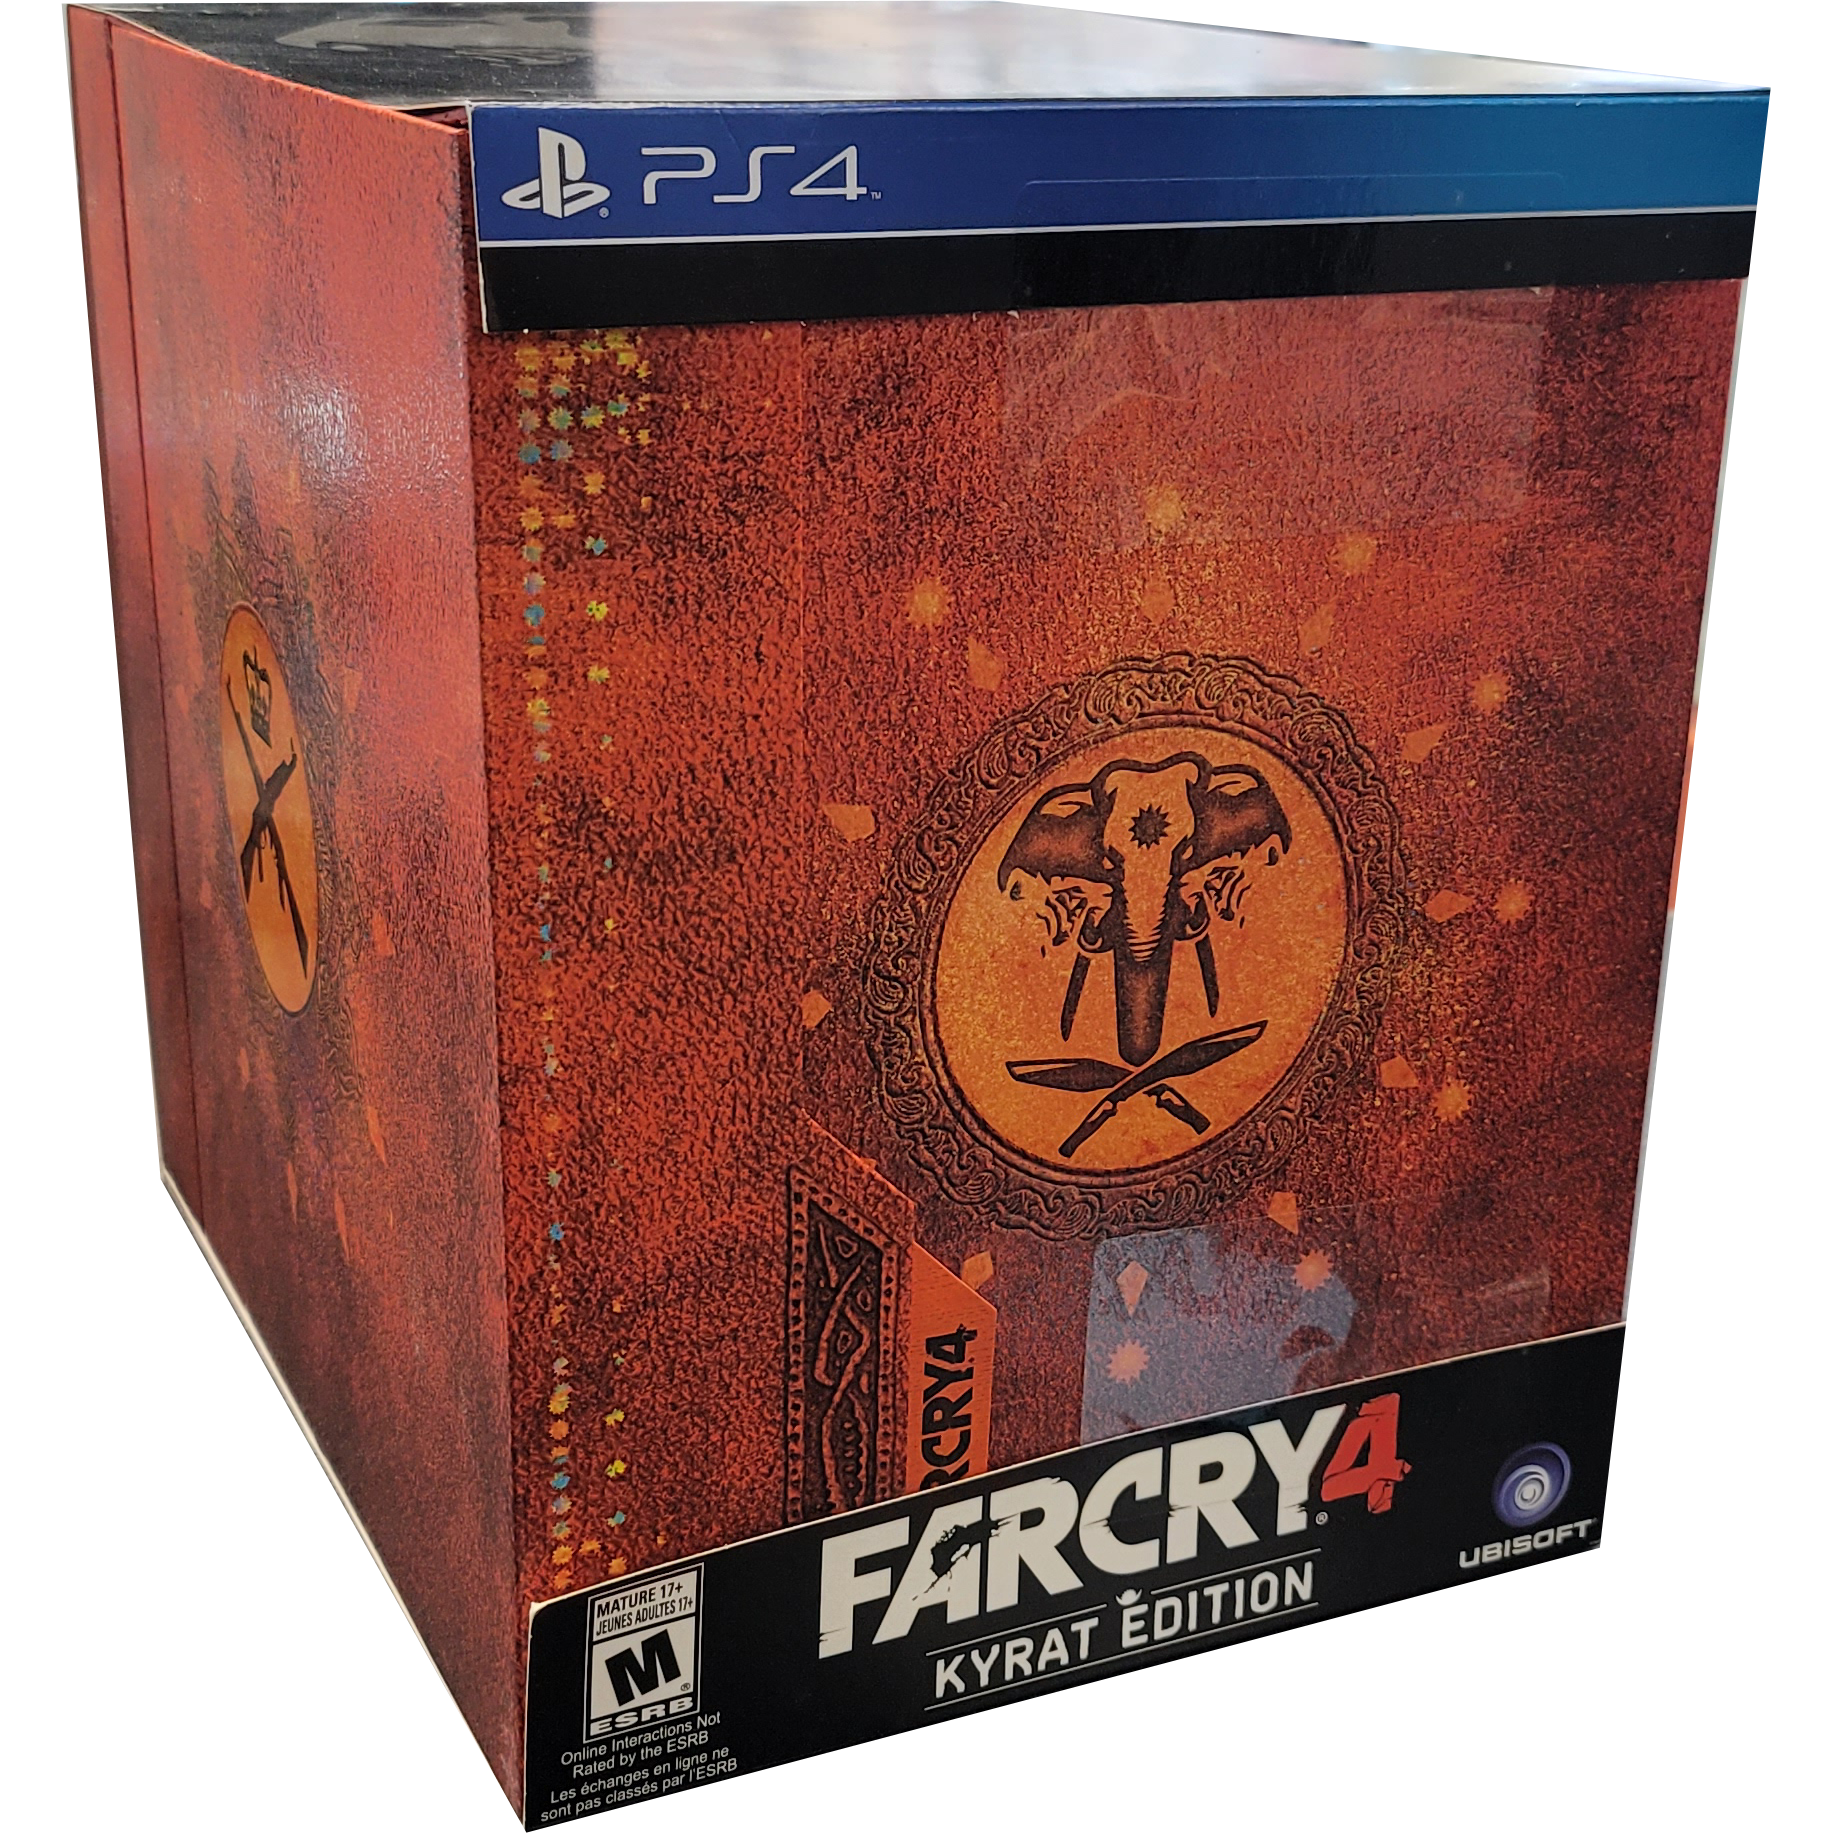 PS4 - Far Cry 4 Kyrat Edition (Sealed)